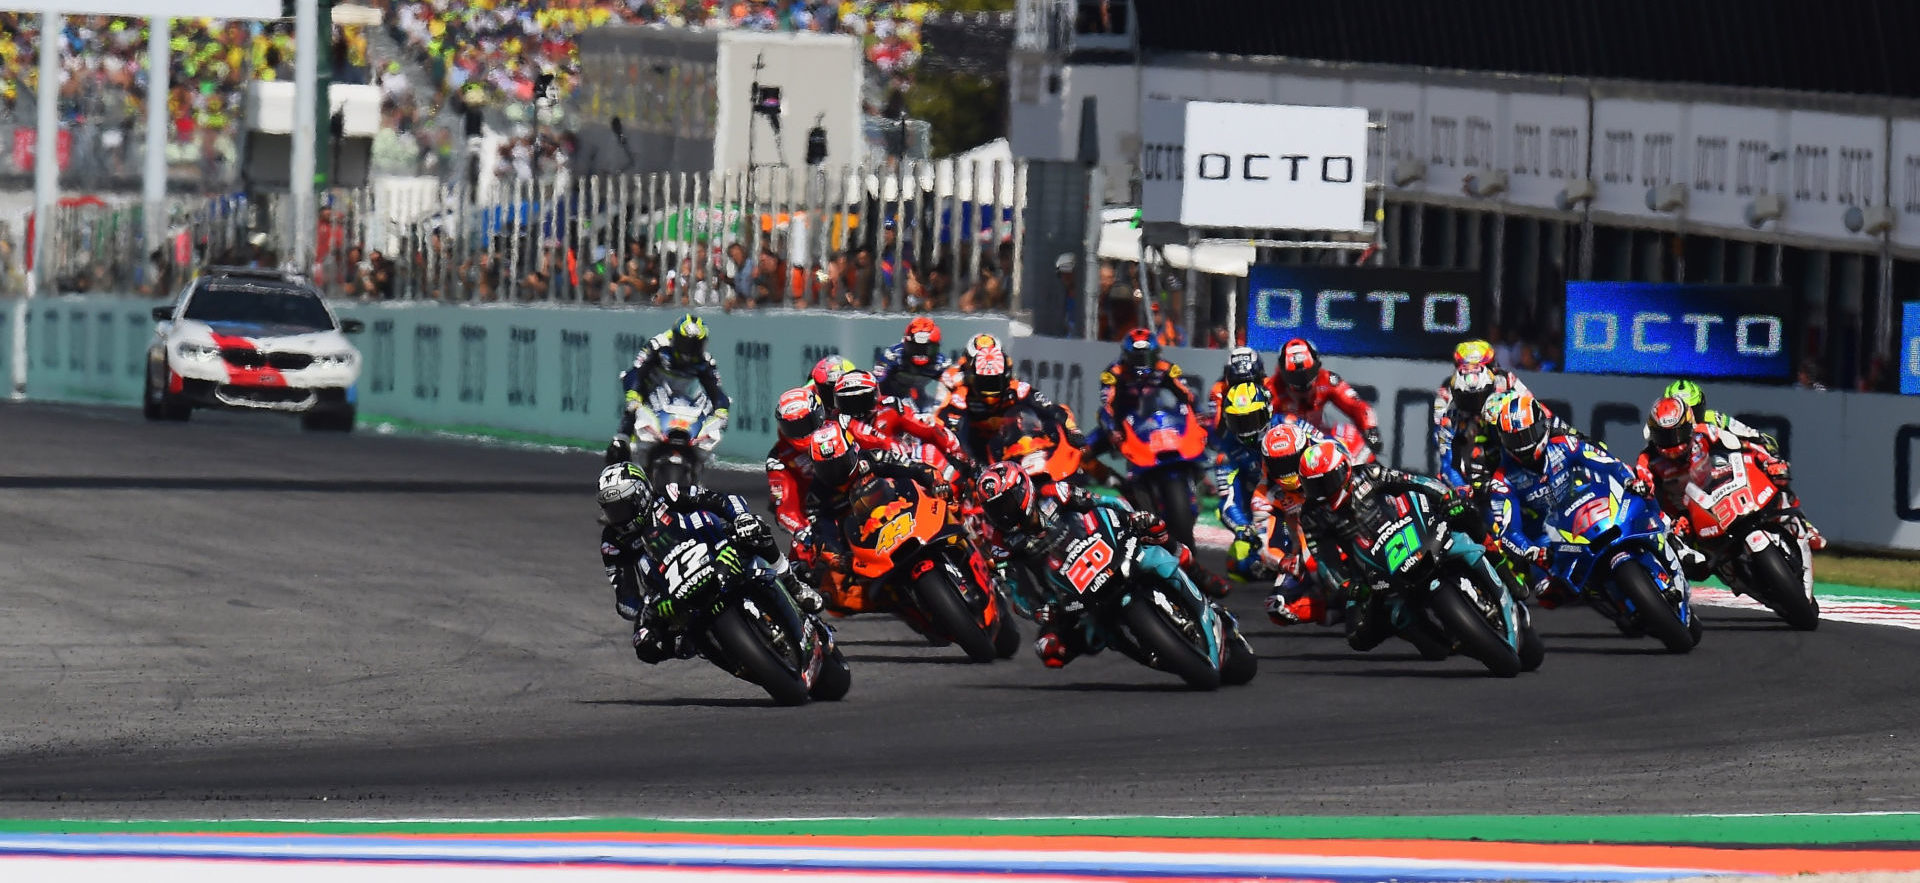 The start of the MotoGP race at Misano in 2019. Photo courtesy of Dorna.